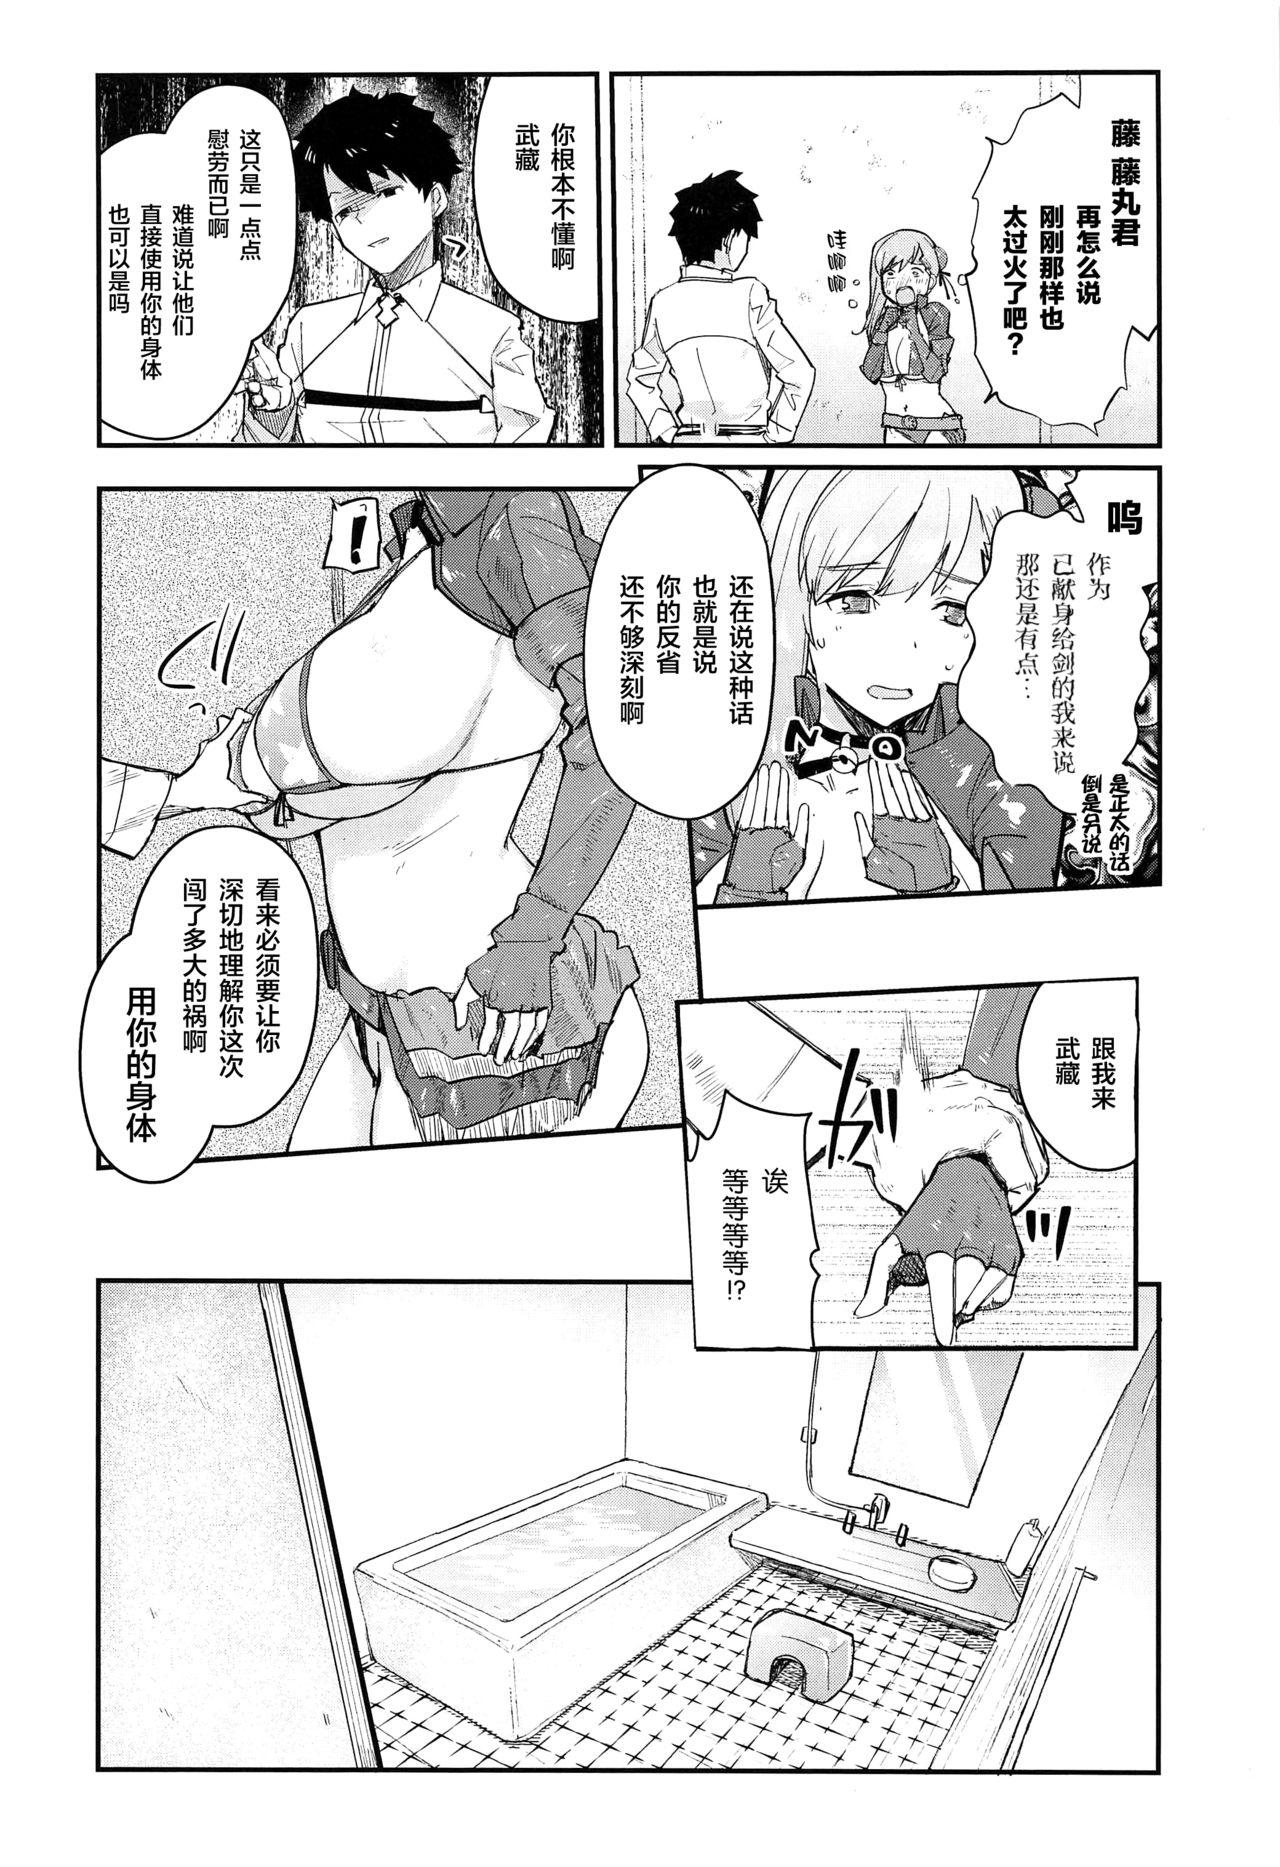 Busty Musashi x BATSU - Fate grand order Spy Camera - Page 7